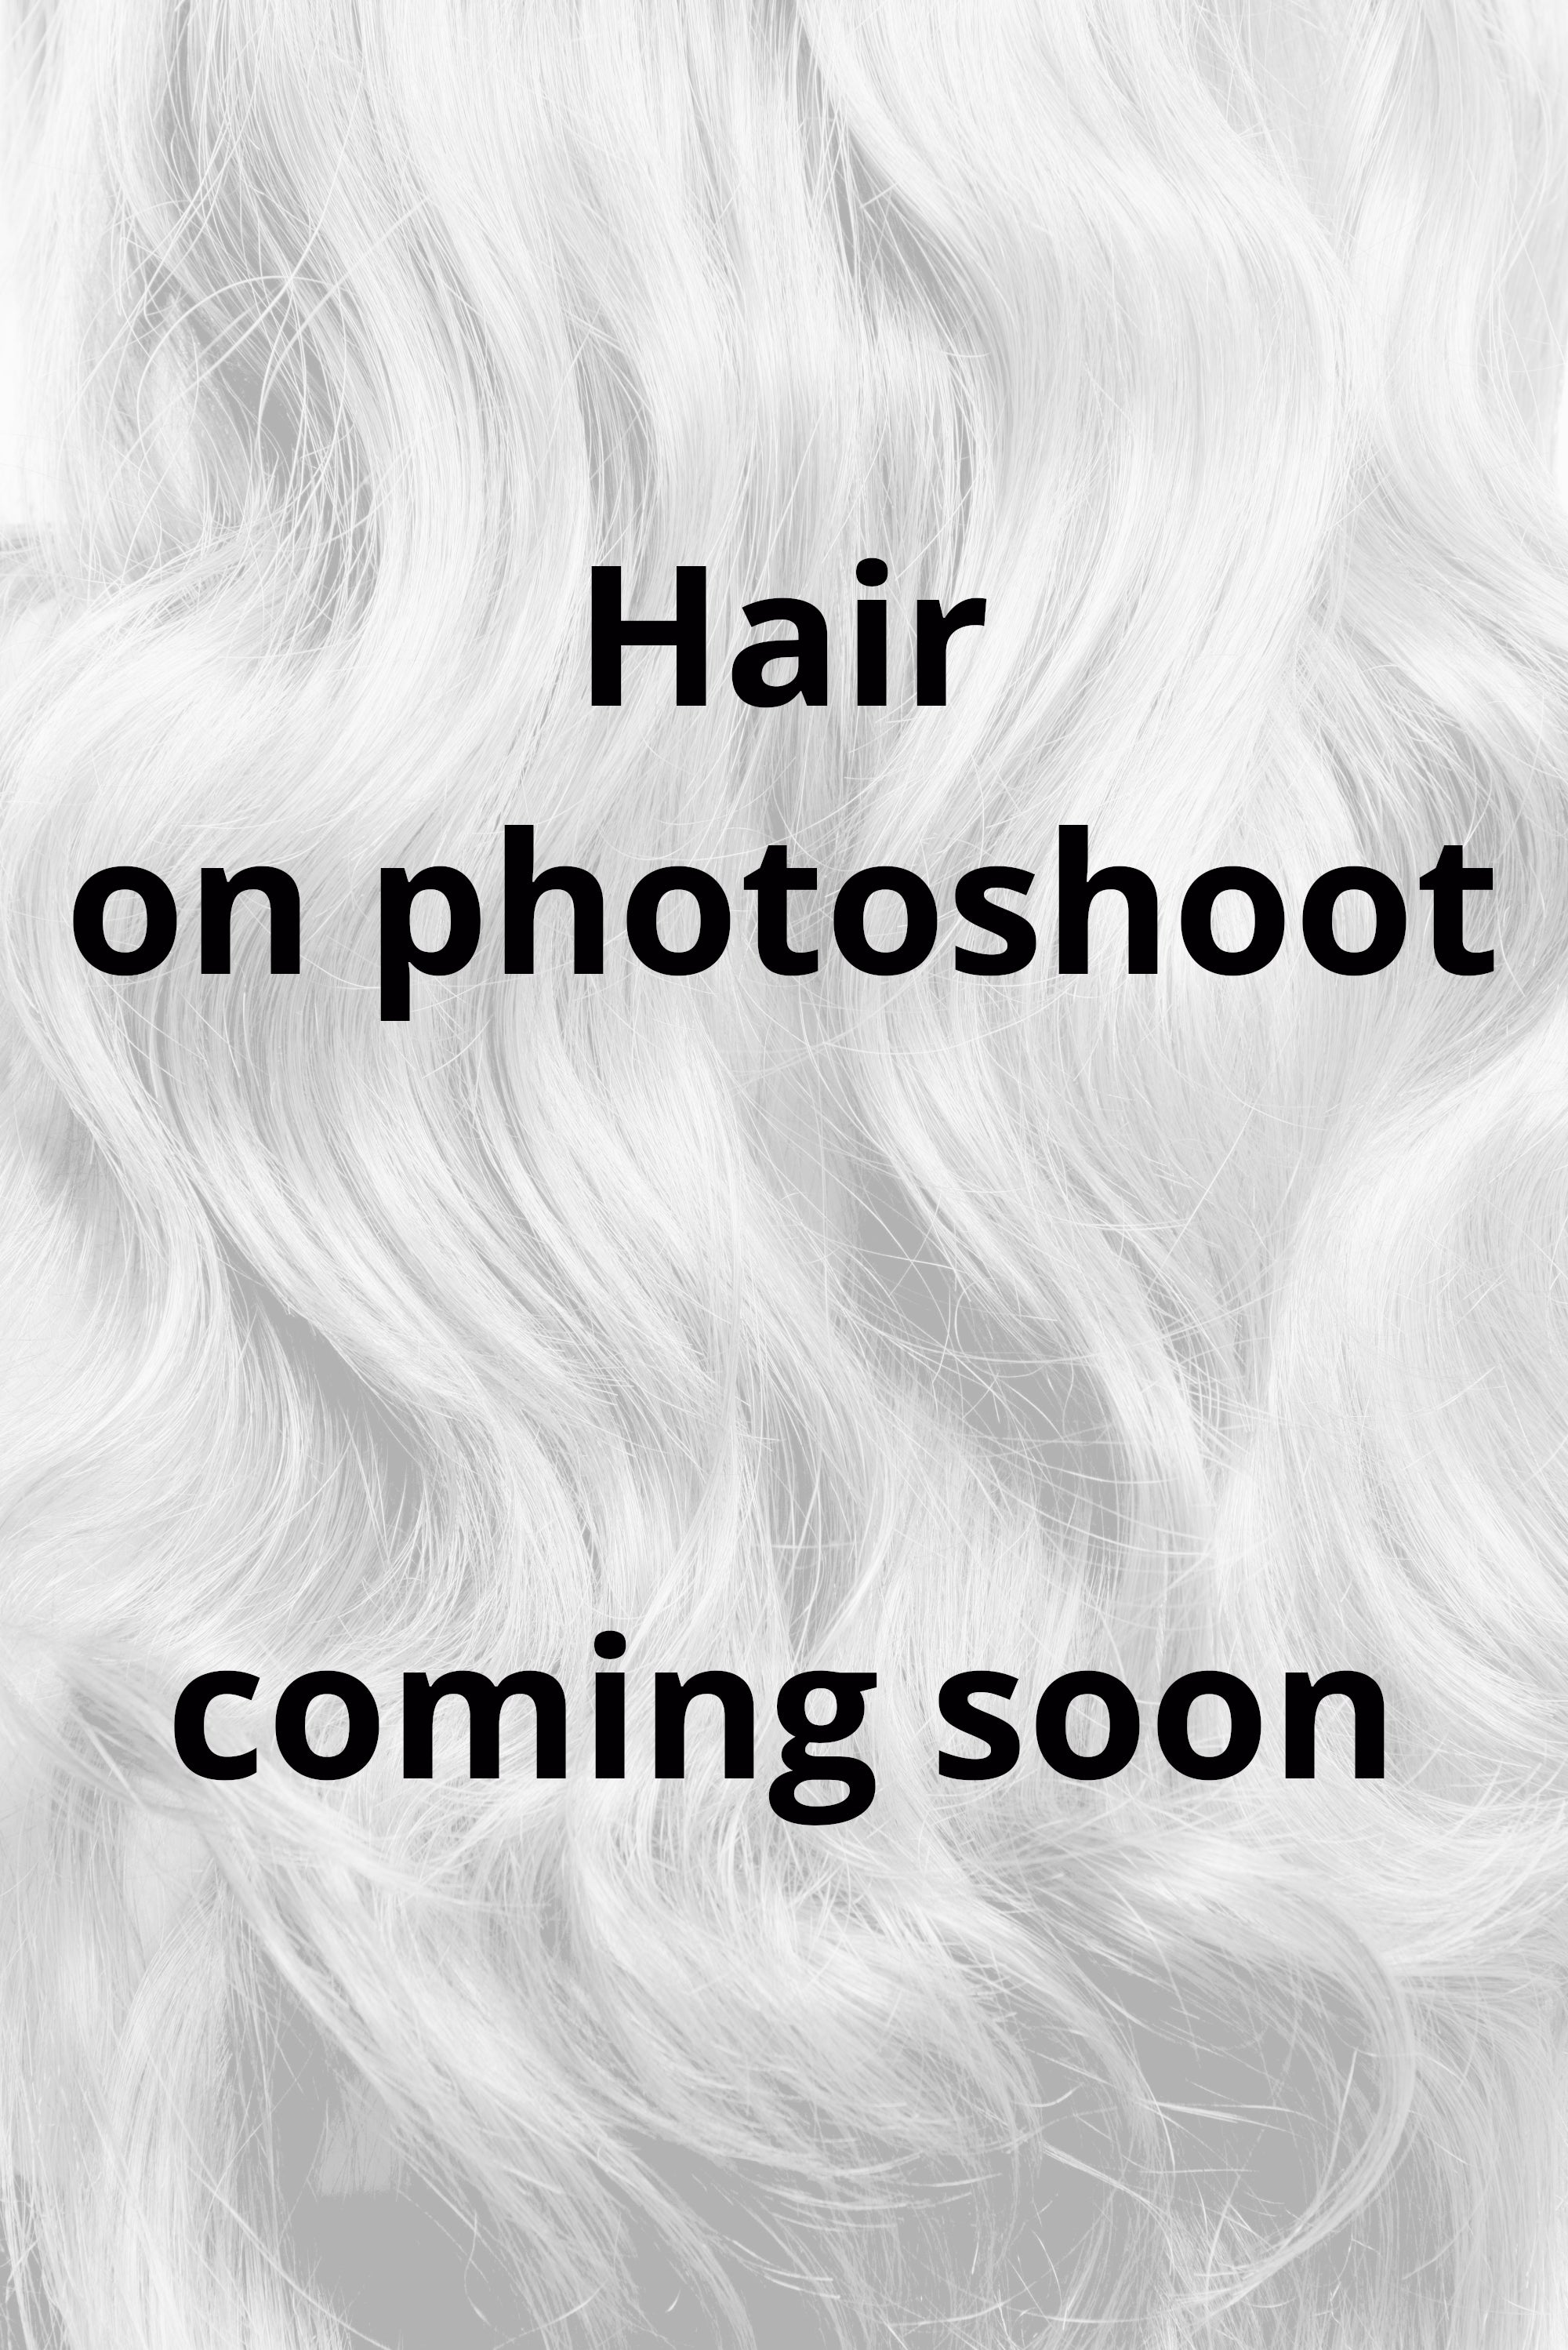 Behair professional Bulk hair "Premium" 22" (55cm) Natural Wave Platinum Blond #60 - 25g hair extensions